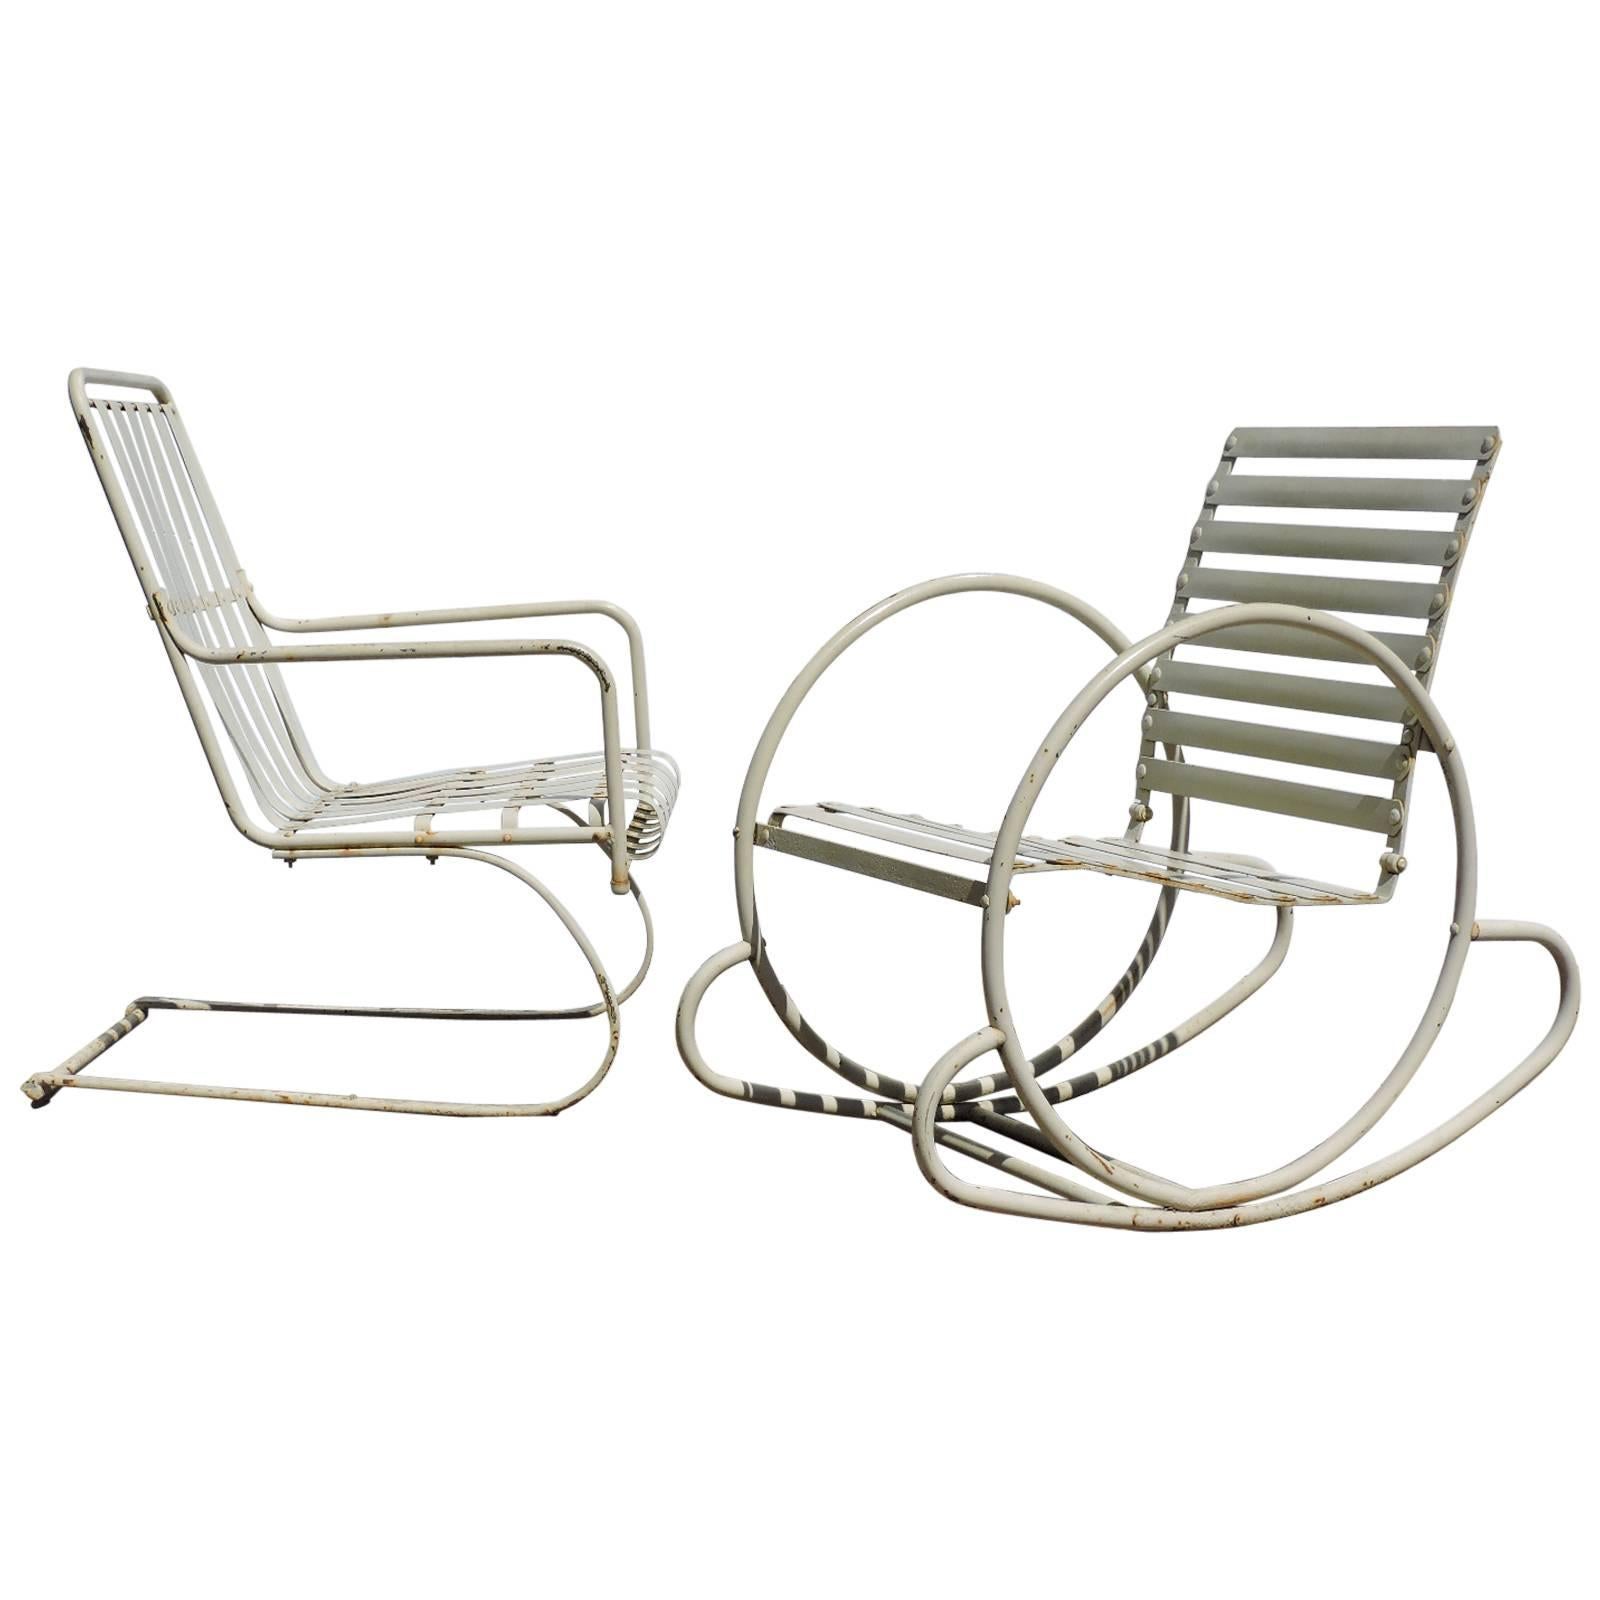 American Art Deco Streamlined Steel Chairs